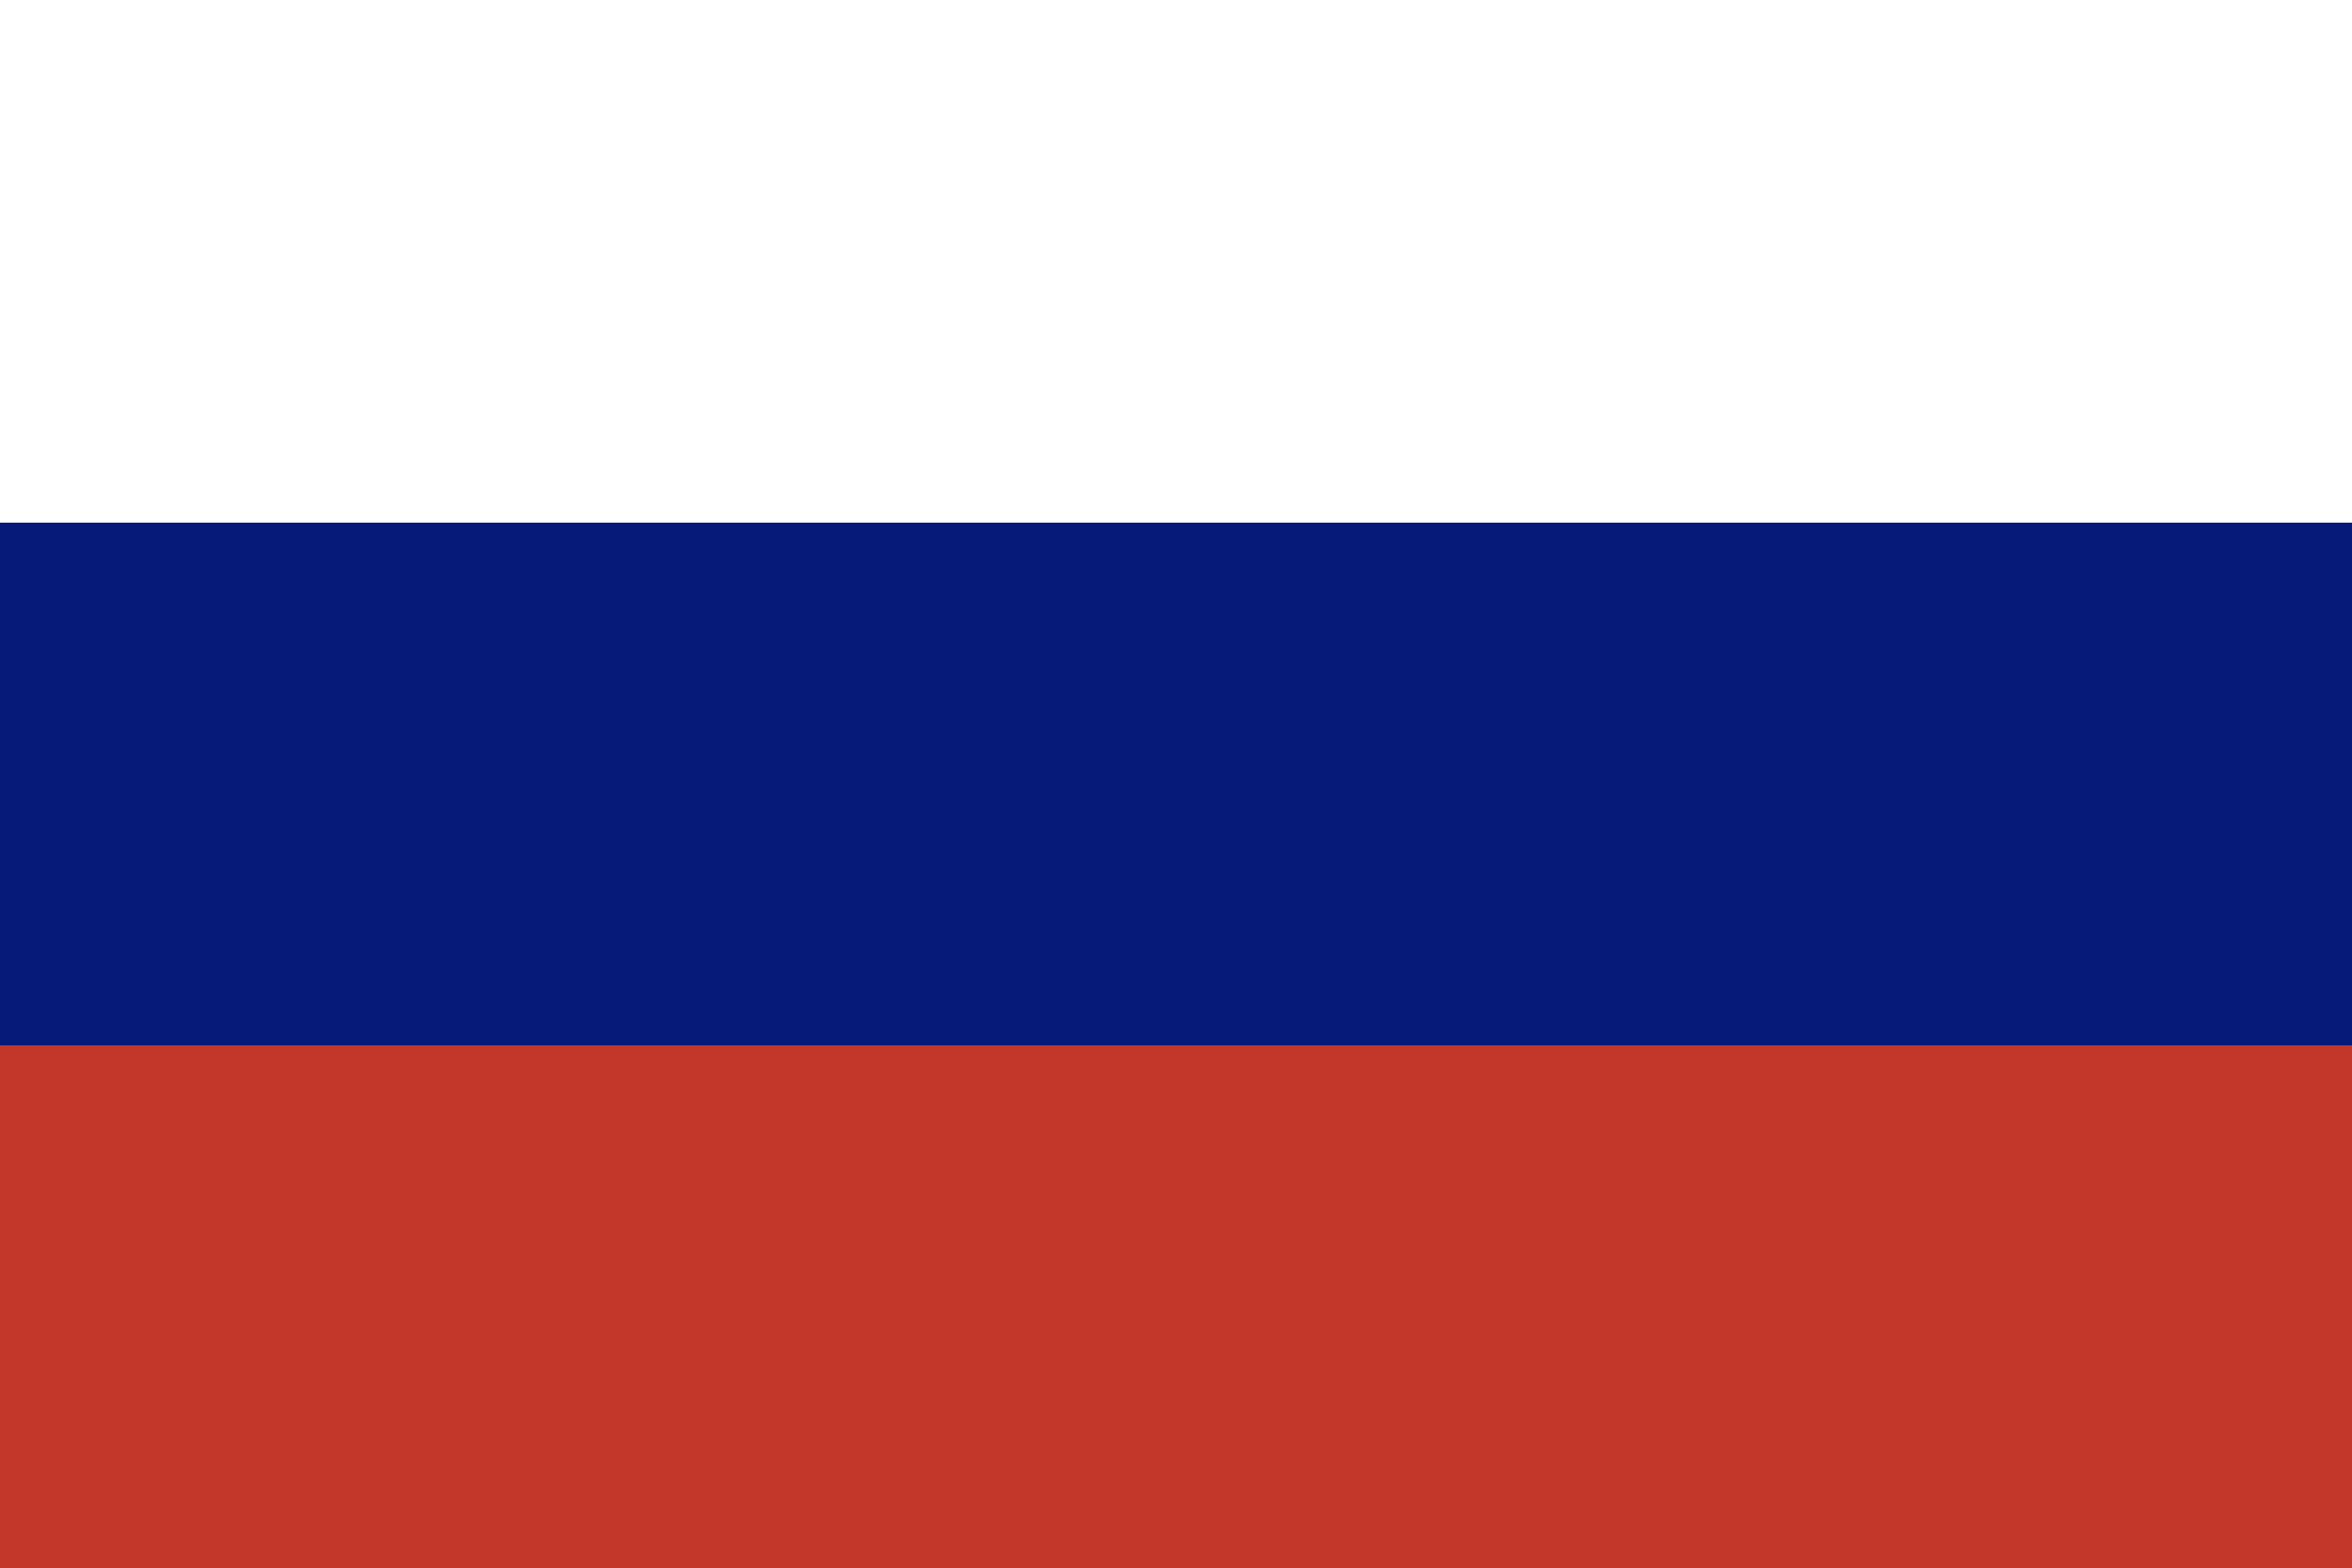 Kremlin or Russian flag